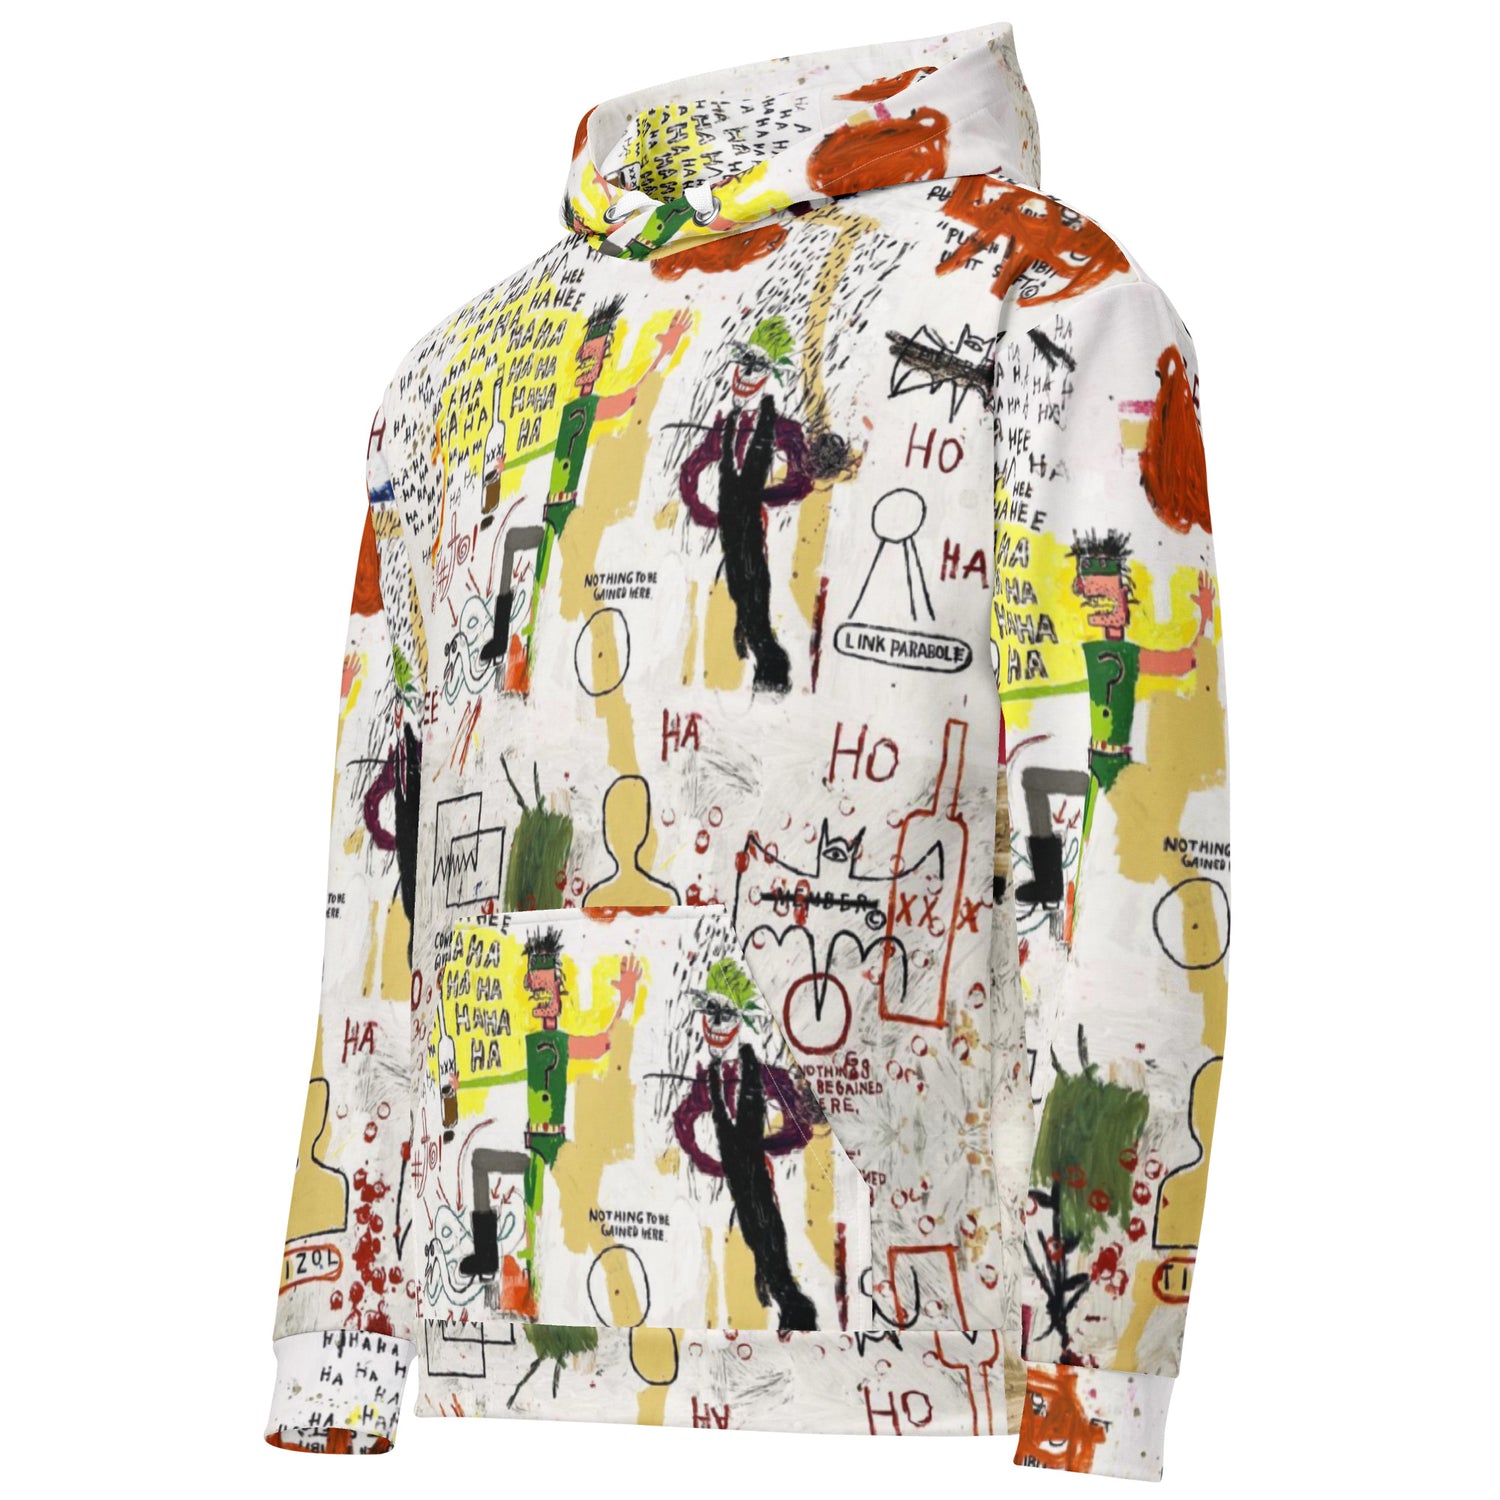 Jean-Michel Basquiat "Riddle Me This Batman" Artwork All Over Printed White Sweatshirt Hoodie Scattered Streetwear